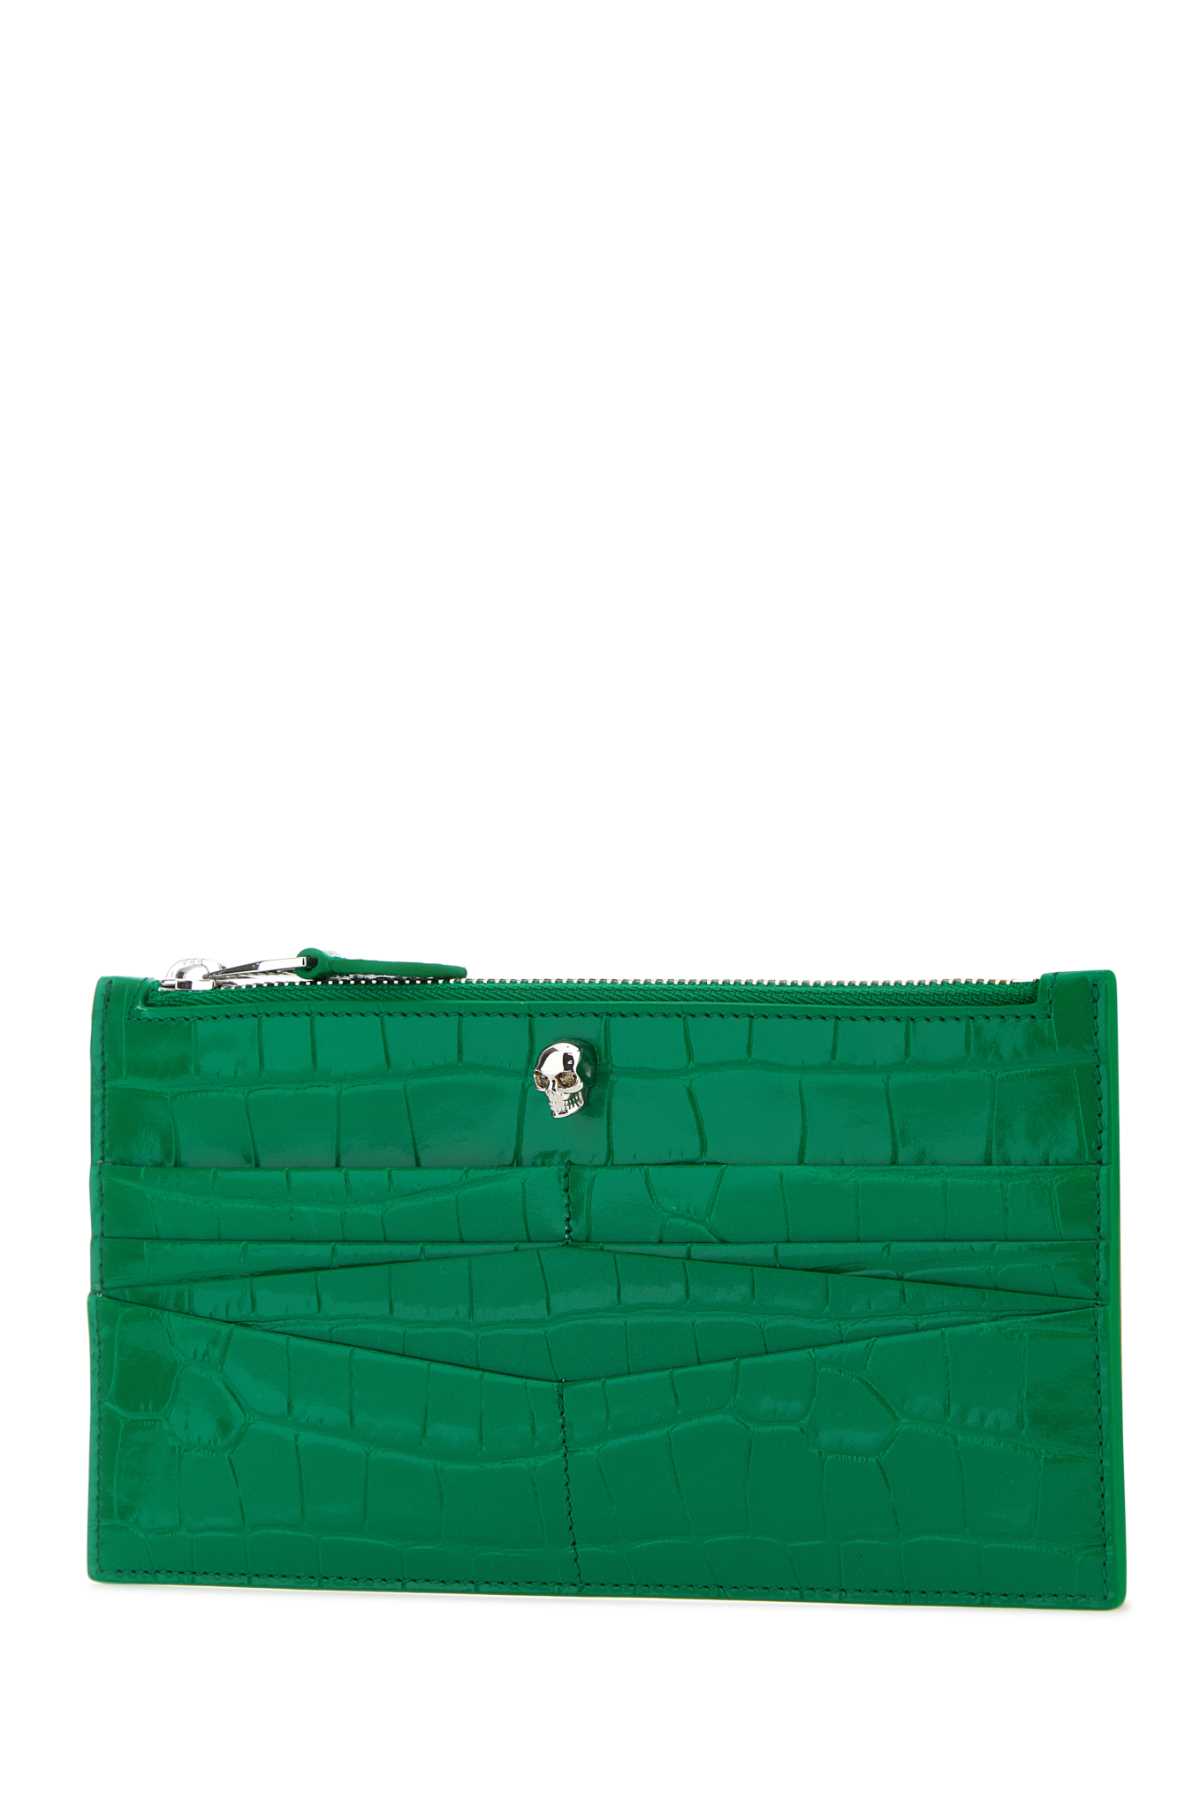 Alexander Mcqueen Grass Green Leather Pouch In Brightgreen